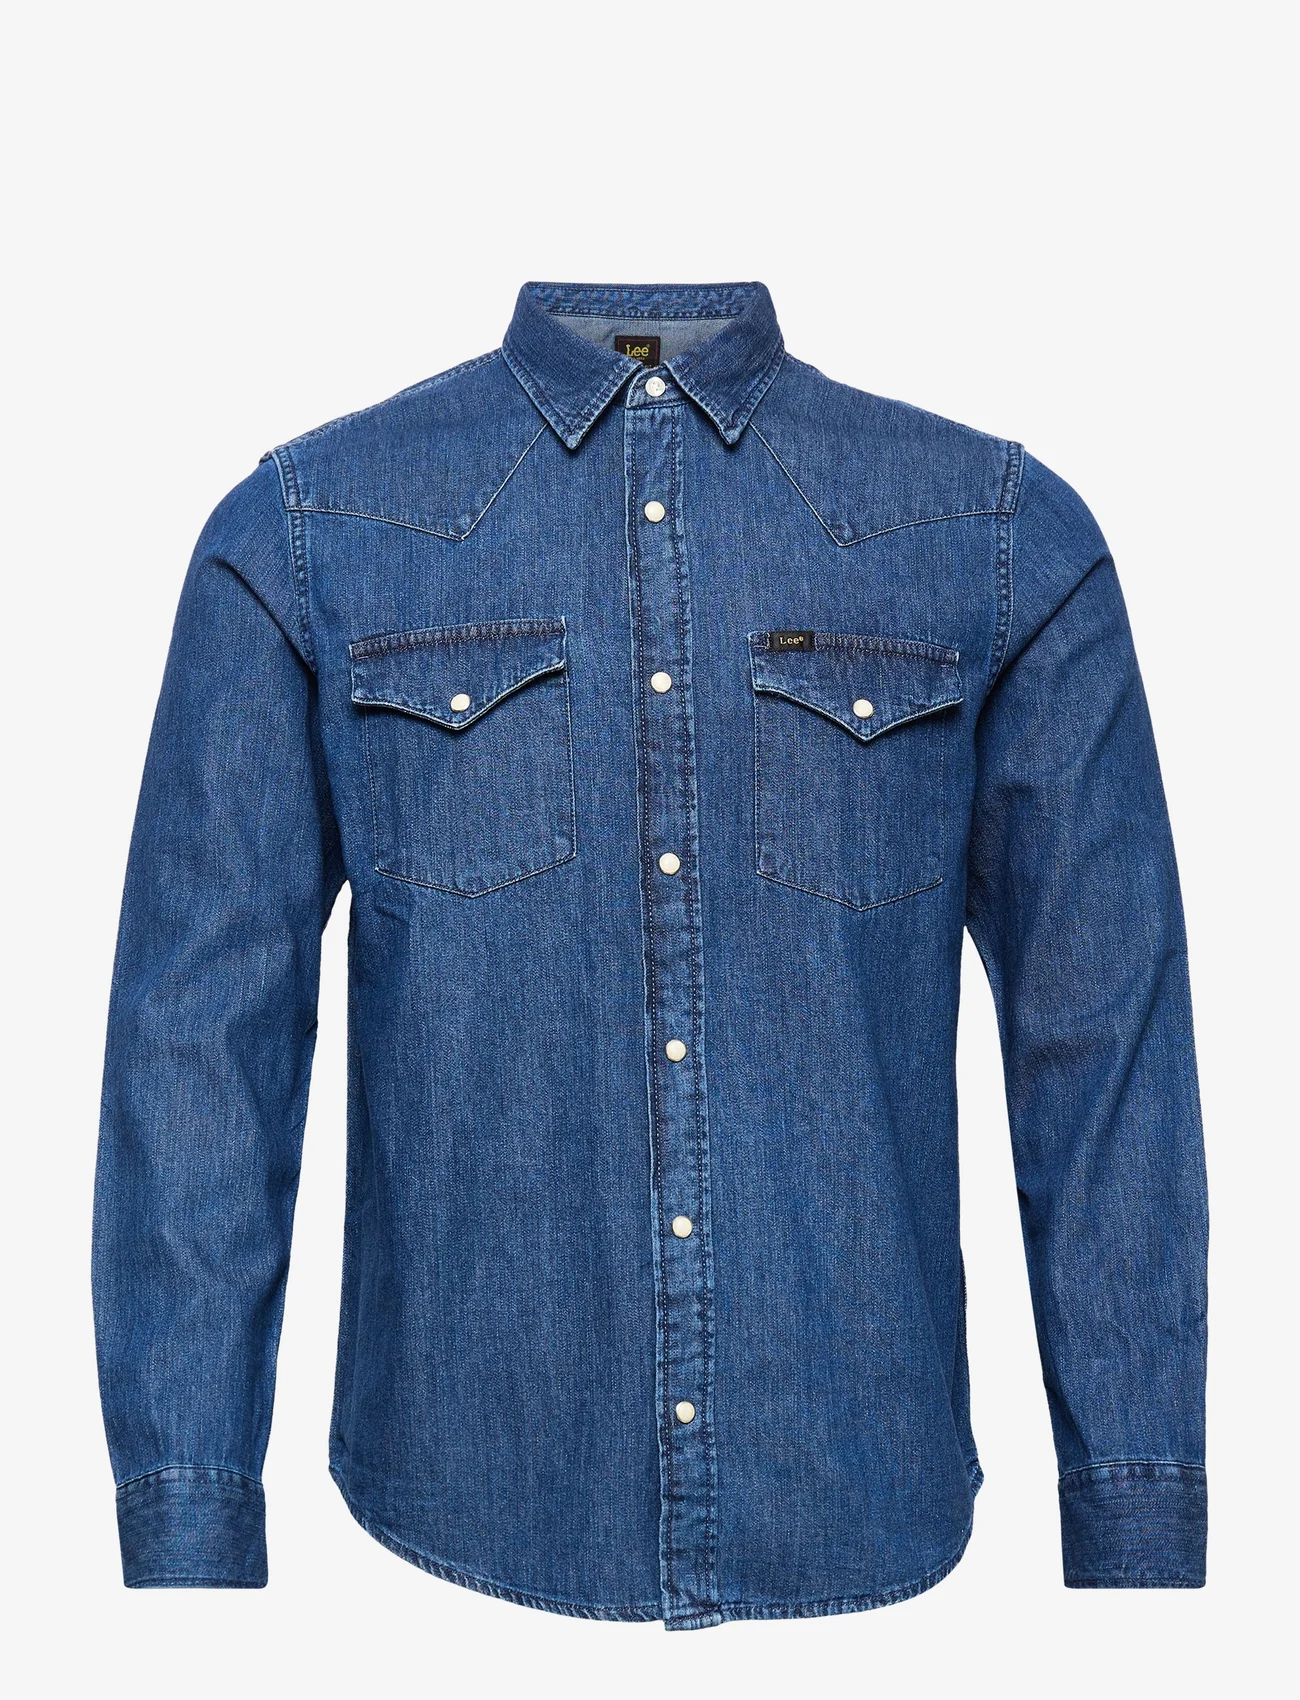 Lee Jeans - REGULAR WESTERN - denim shirts - mid stone - 0